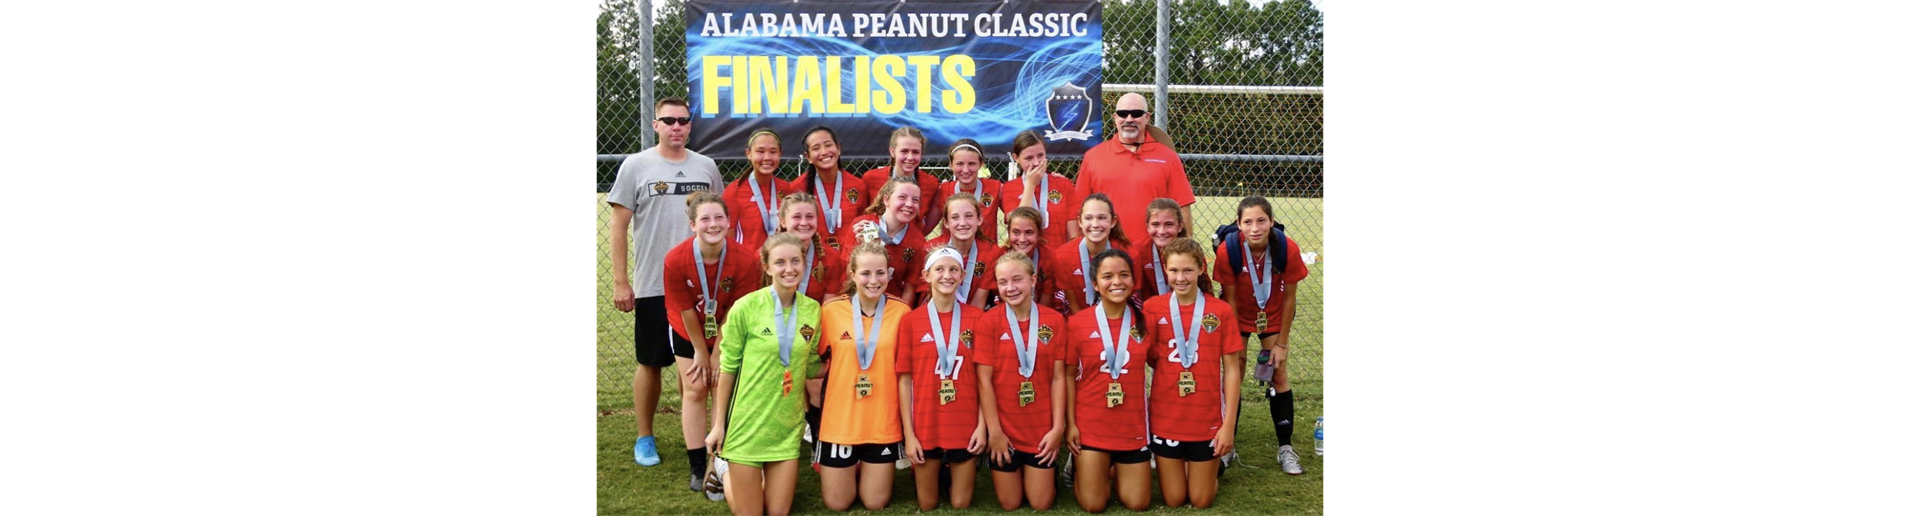 Alabama Peanut Classic 16U Girls Finalist 